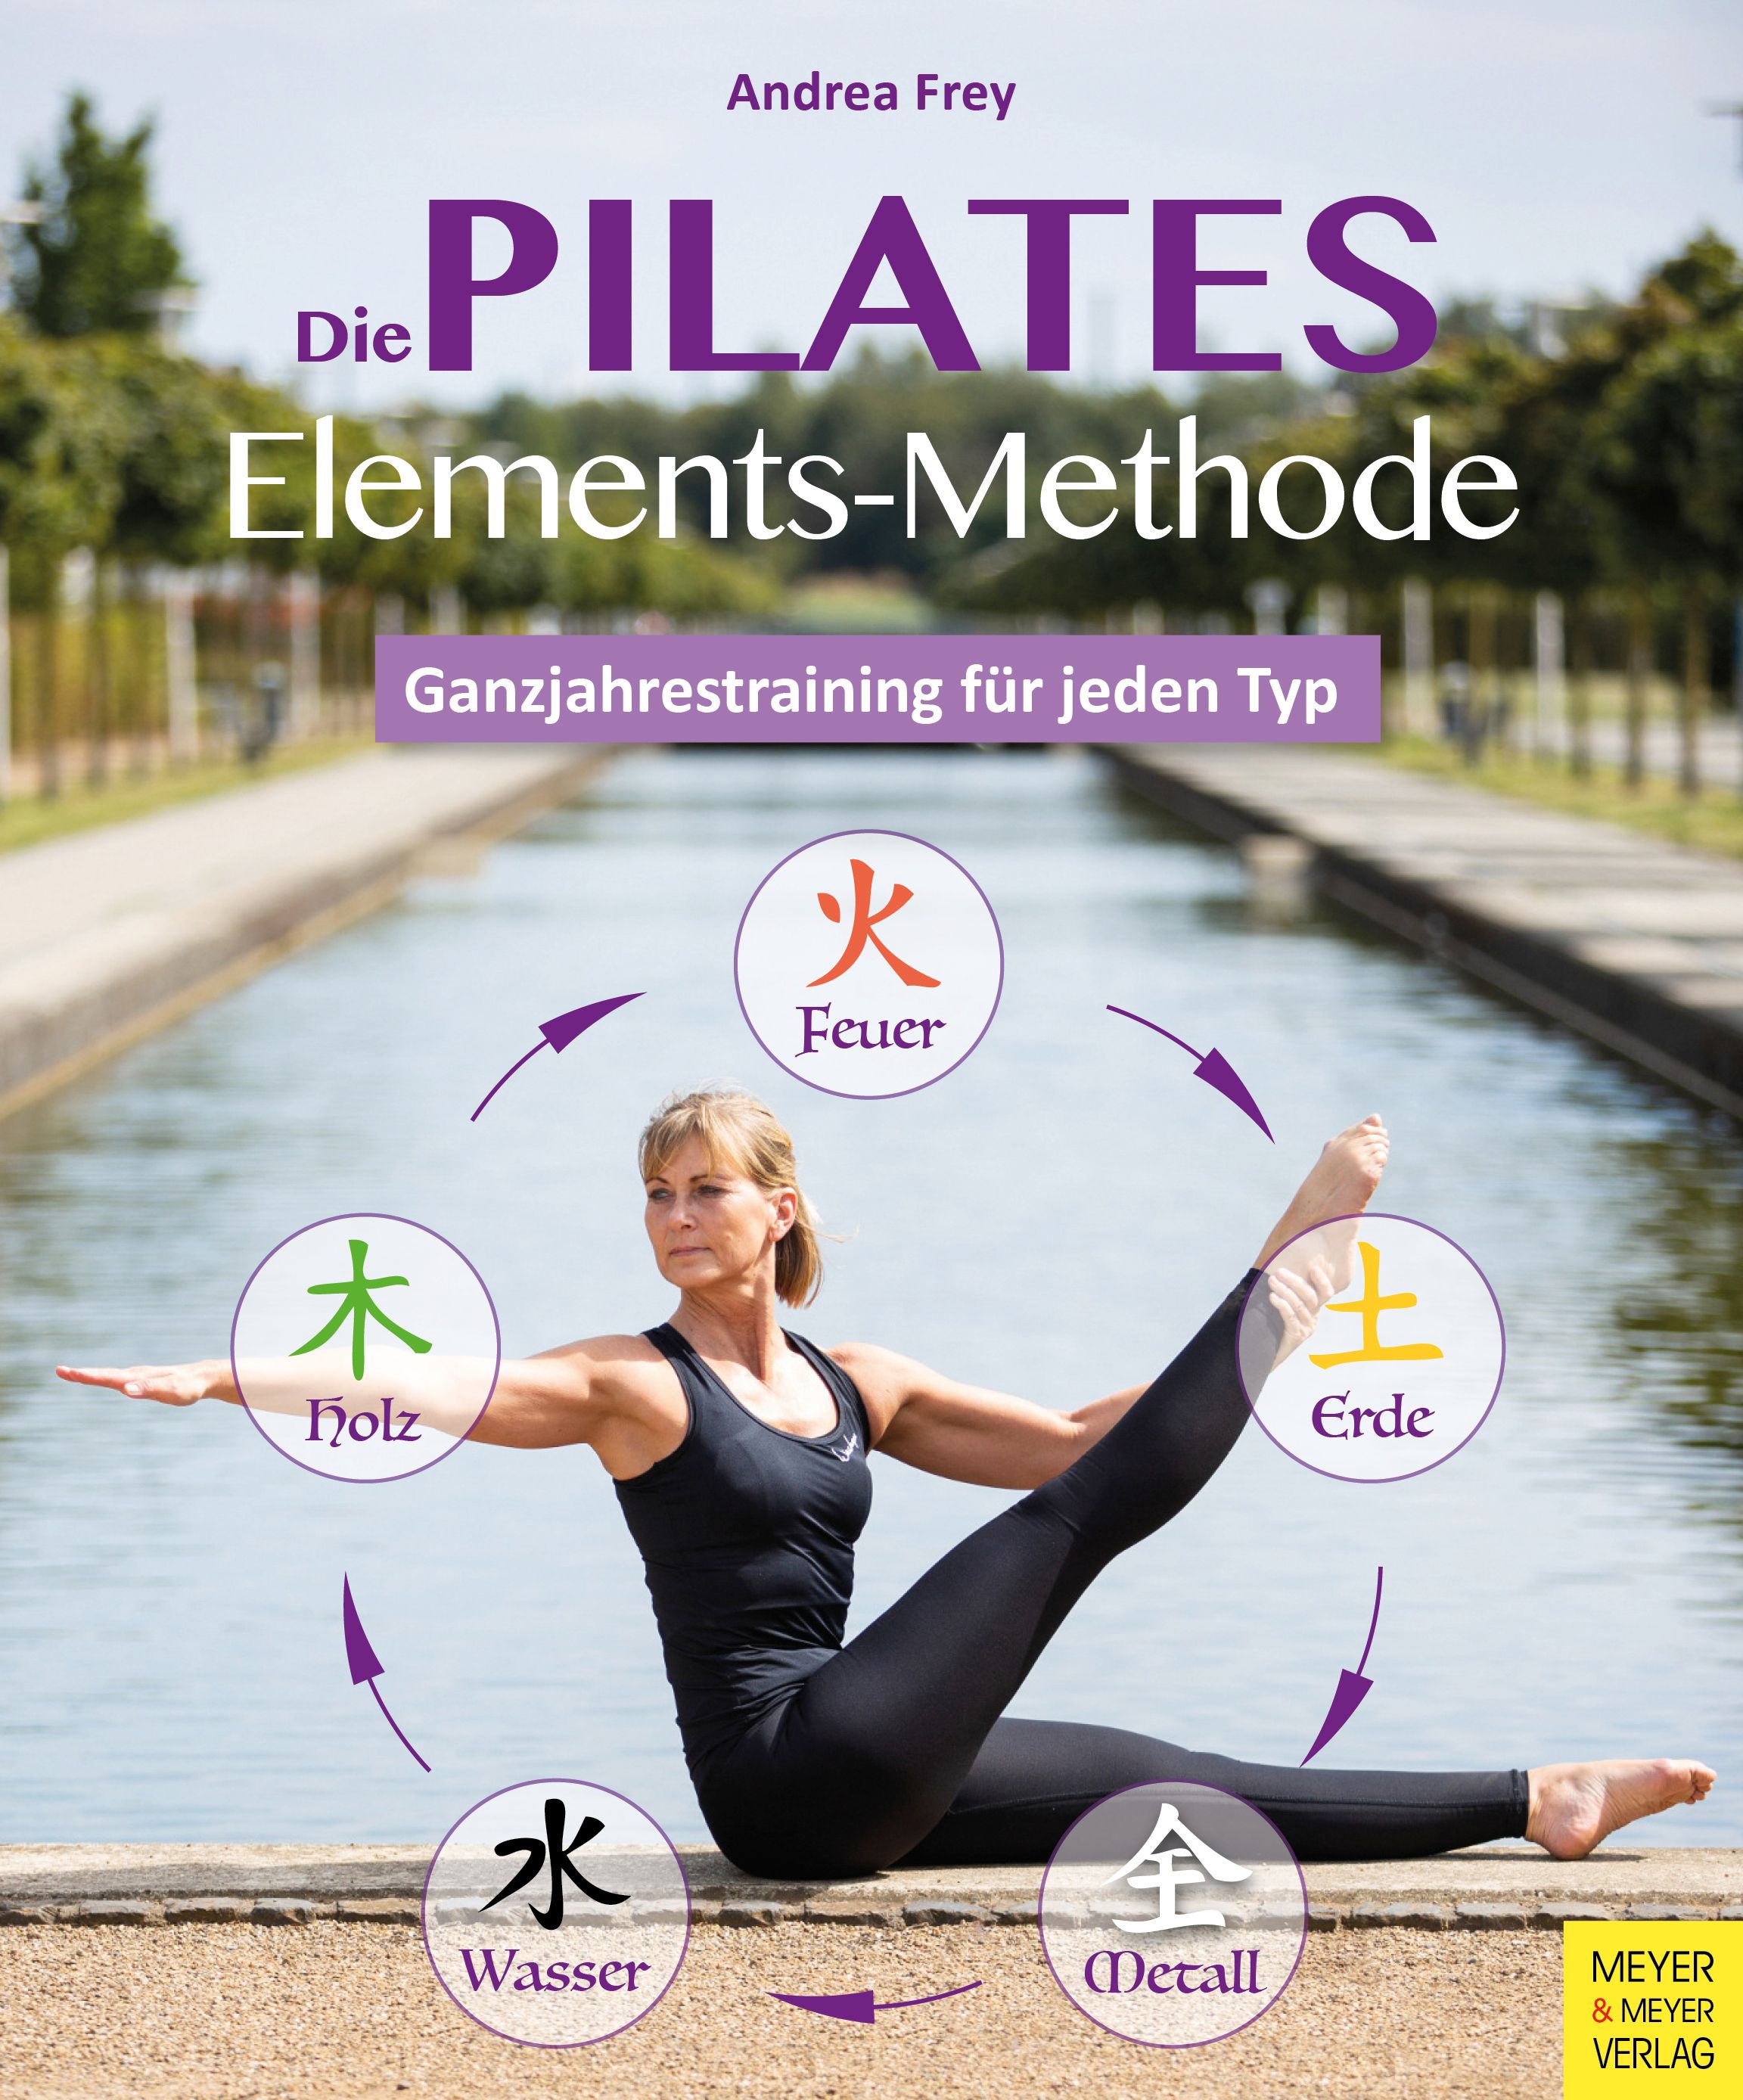 Die Pilates Elements Methode